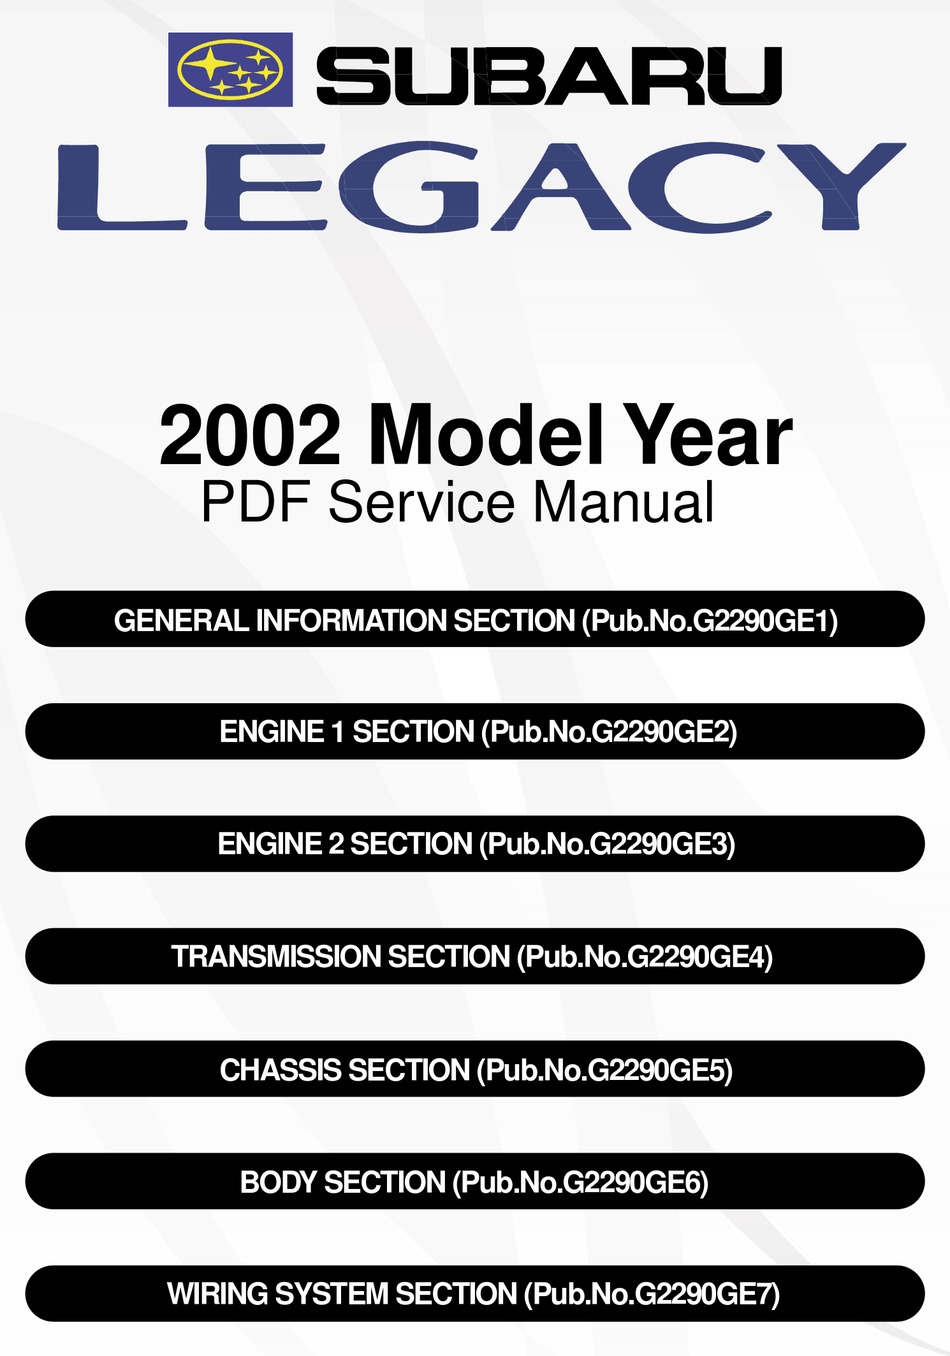 SUBARU LEGACY 2002 SERVICE MANUAL Pdf Download ManualsLib